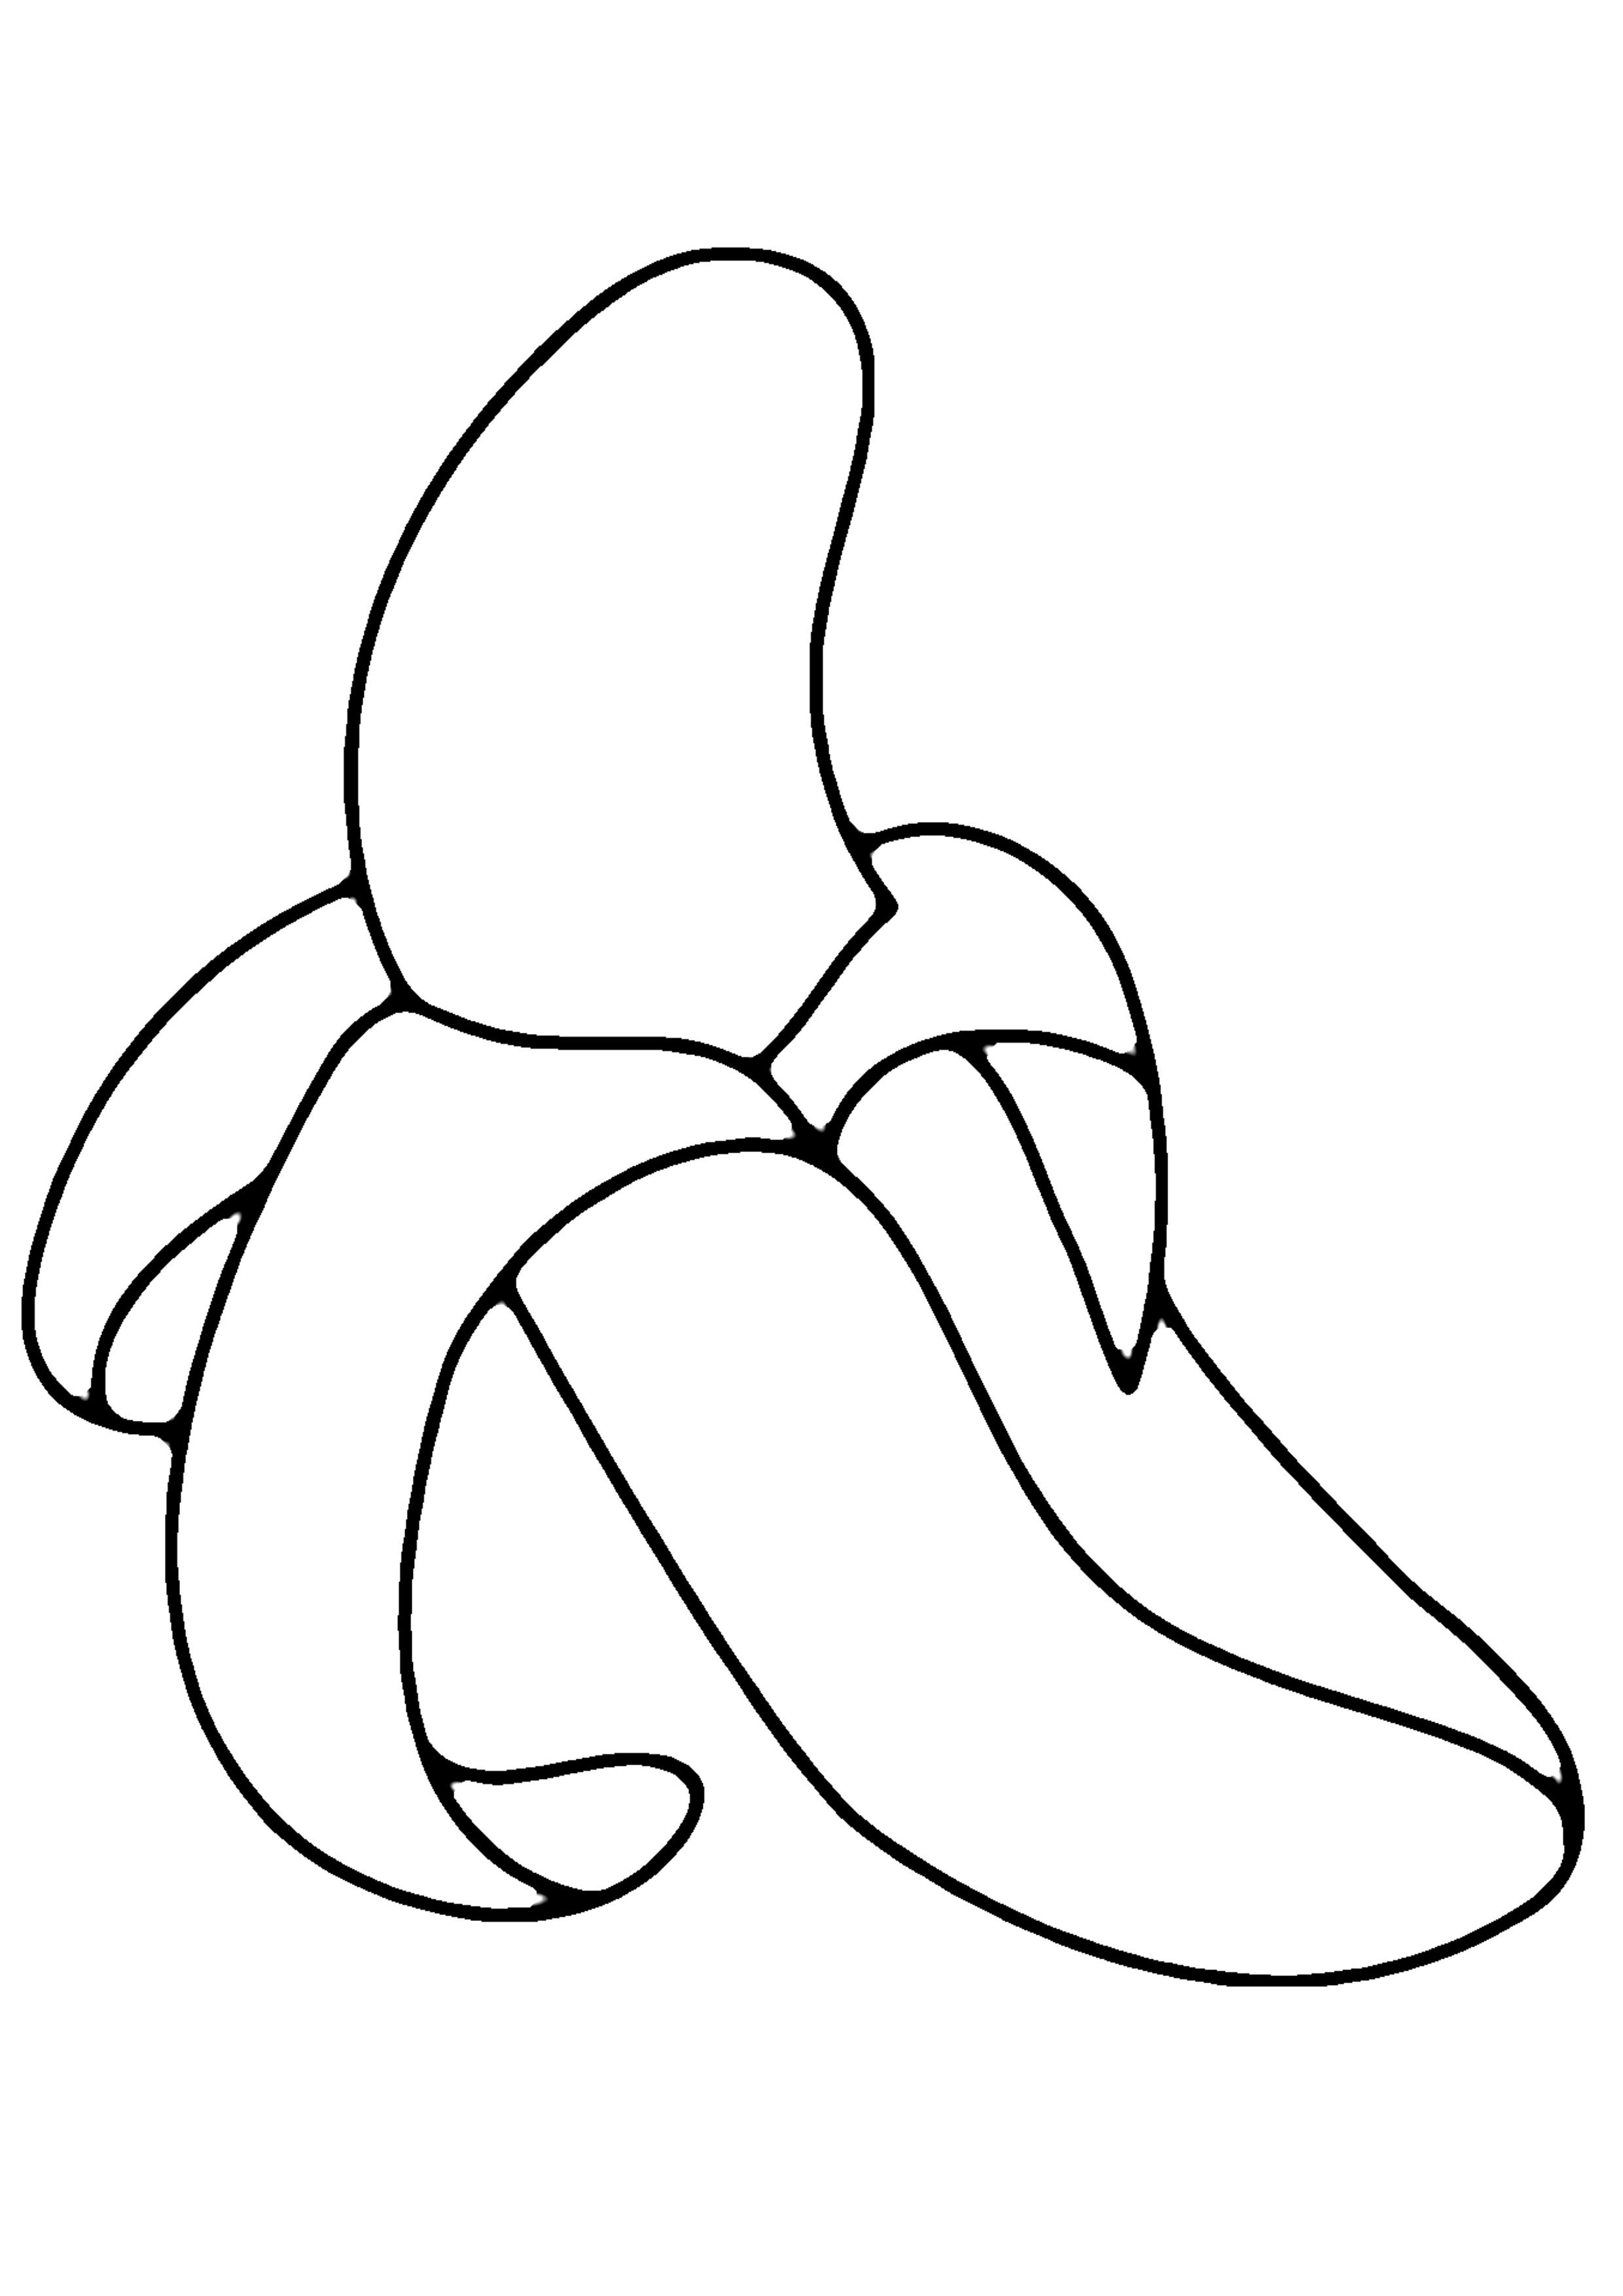 Banane 01